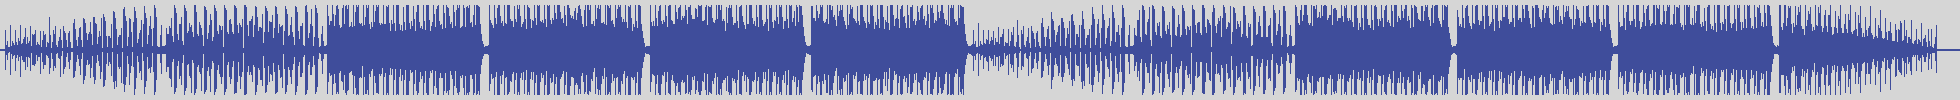 nf_boyz_records [NFY062] Jeffrey Destina - Furius [Original Mix] audio wave form